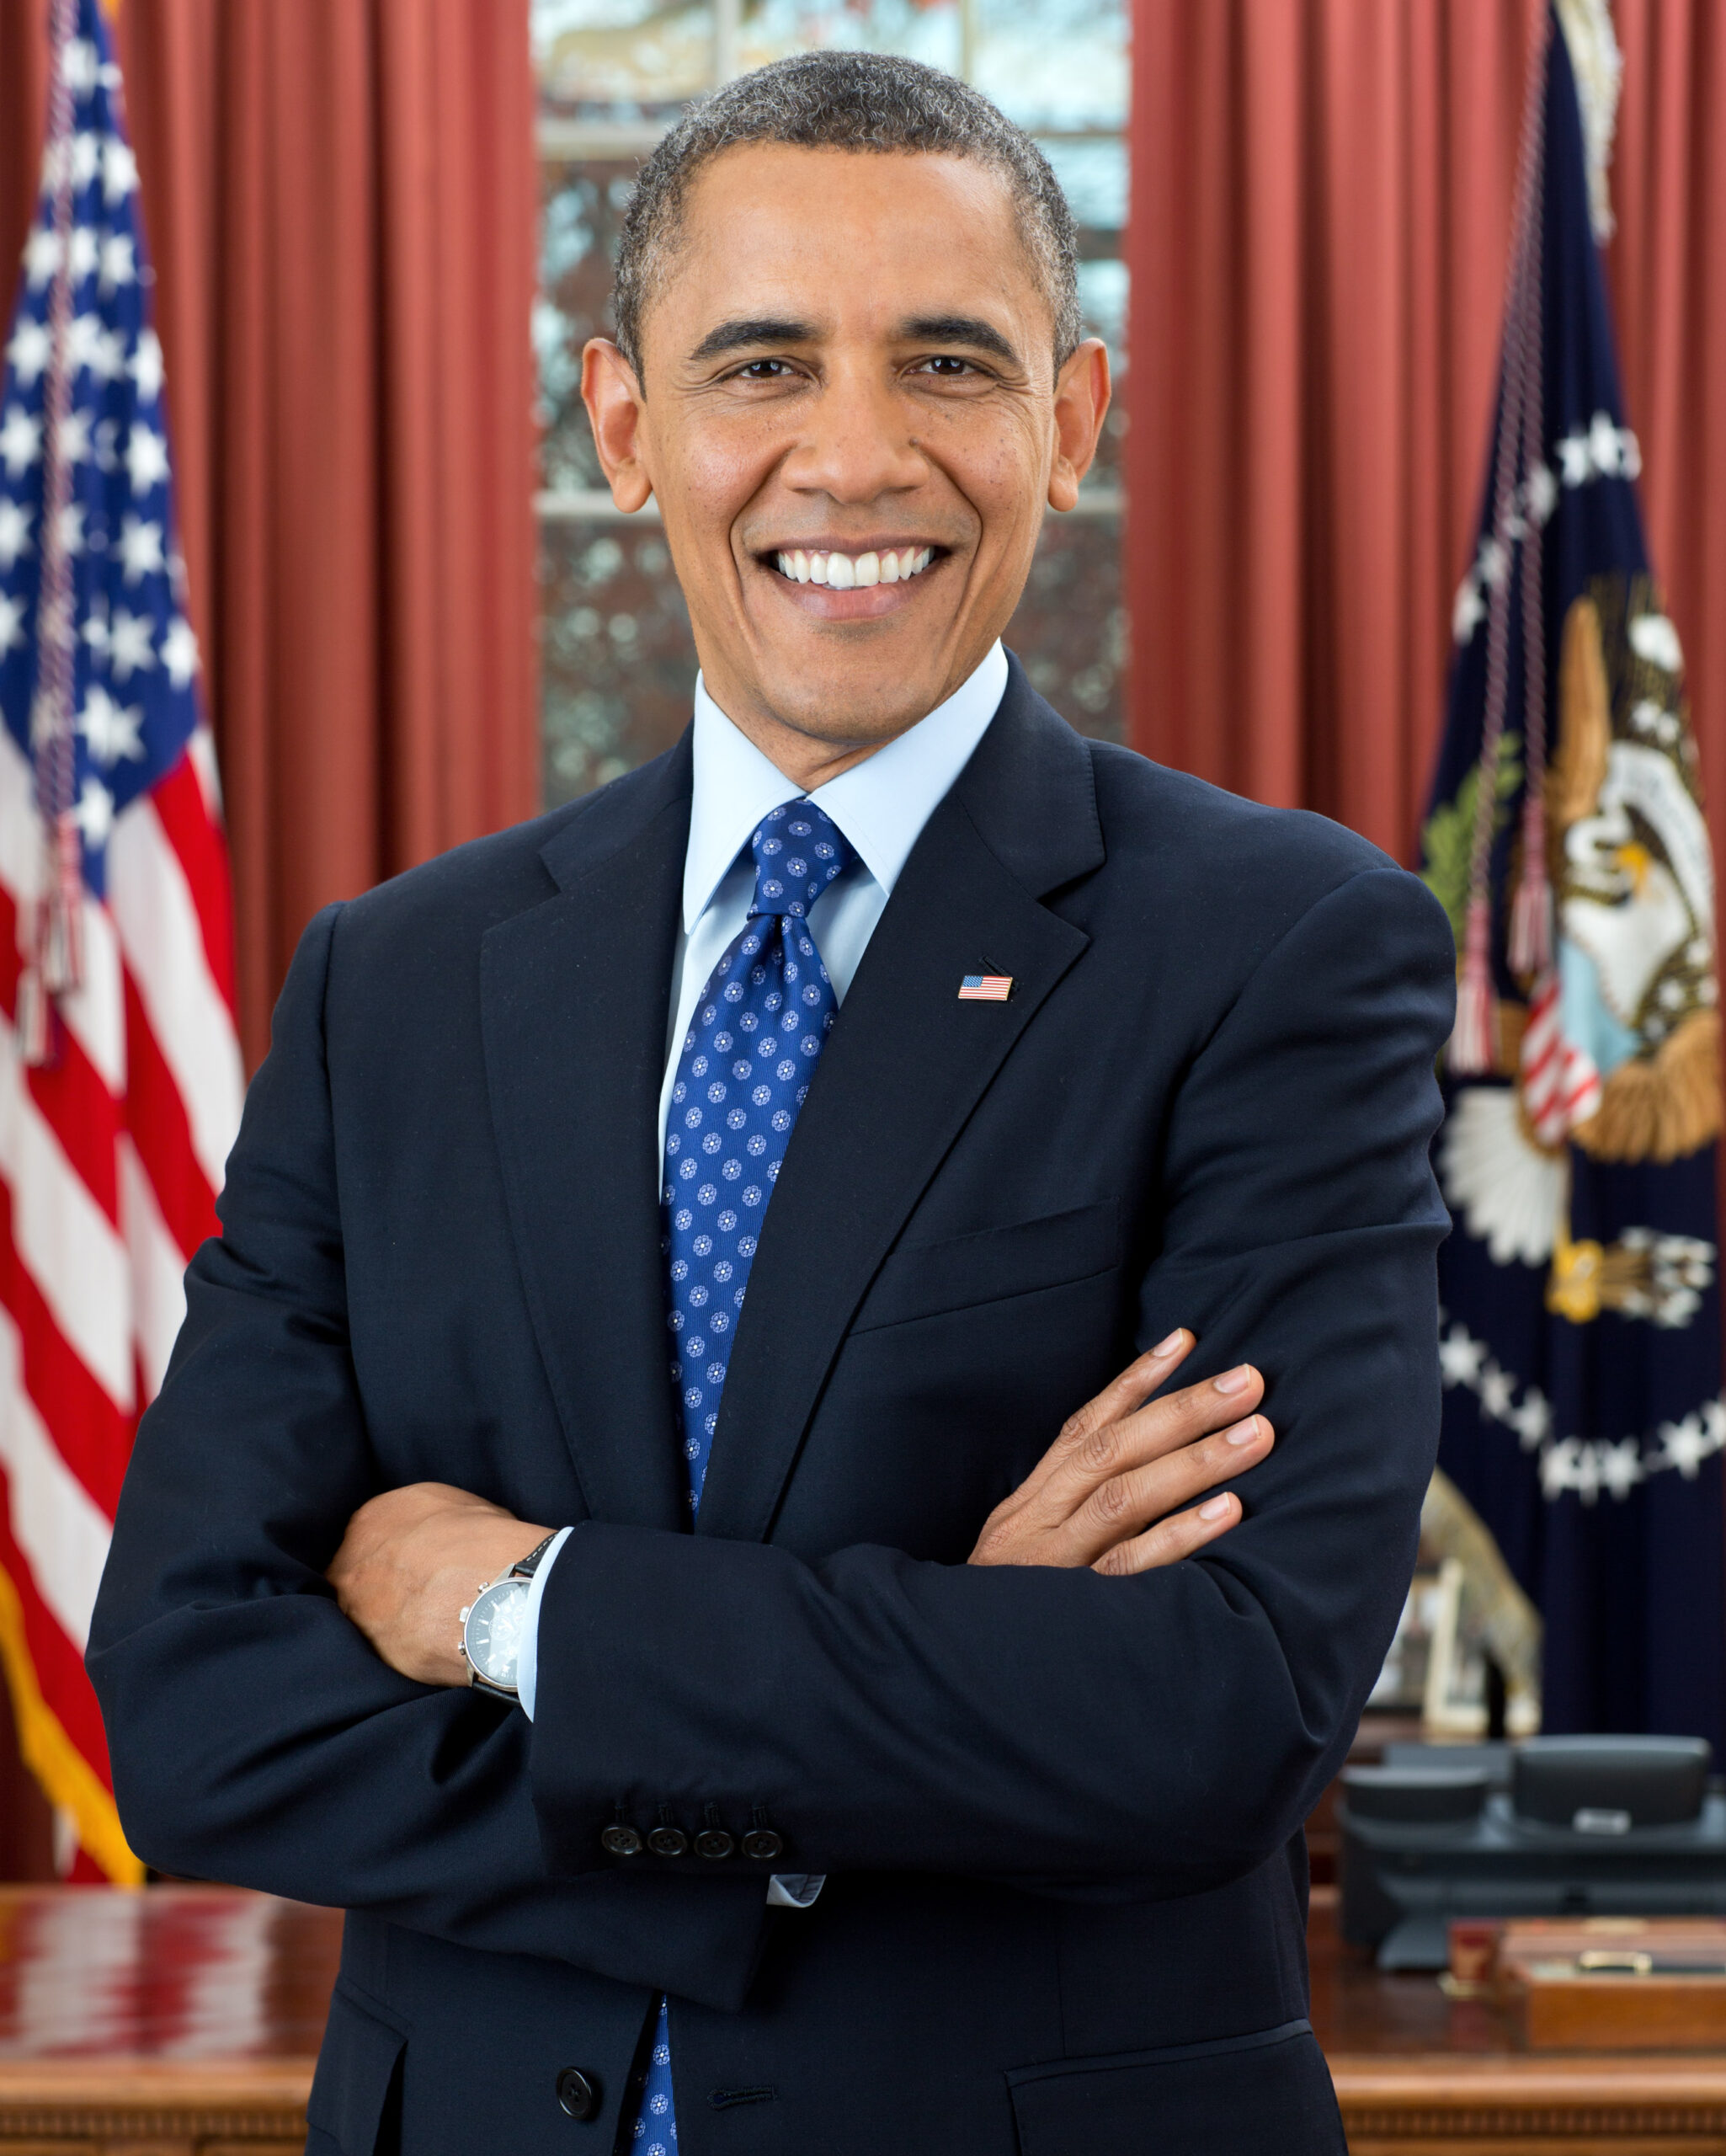  Barack Obama : son personal branding